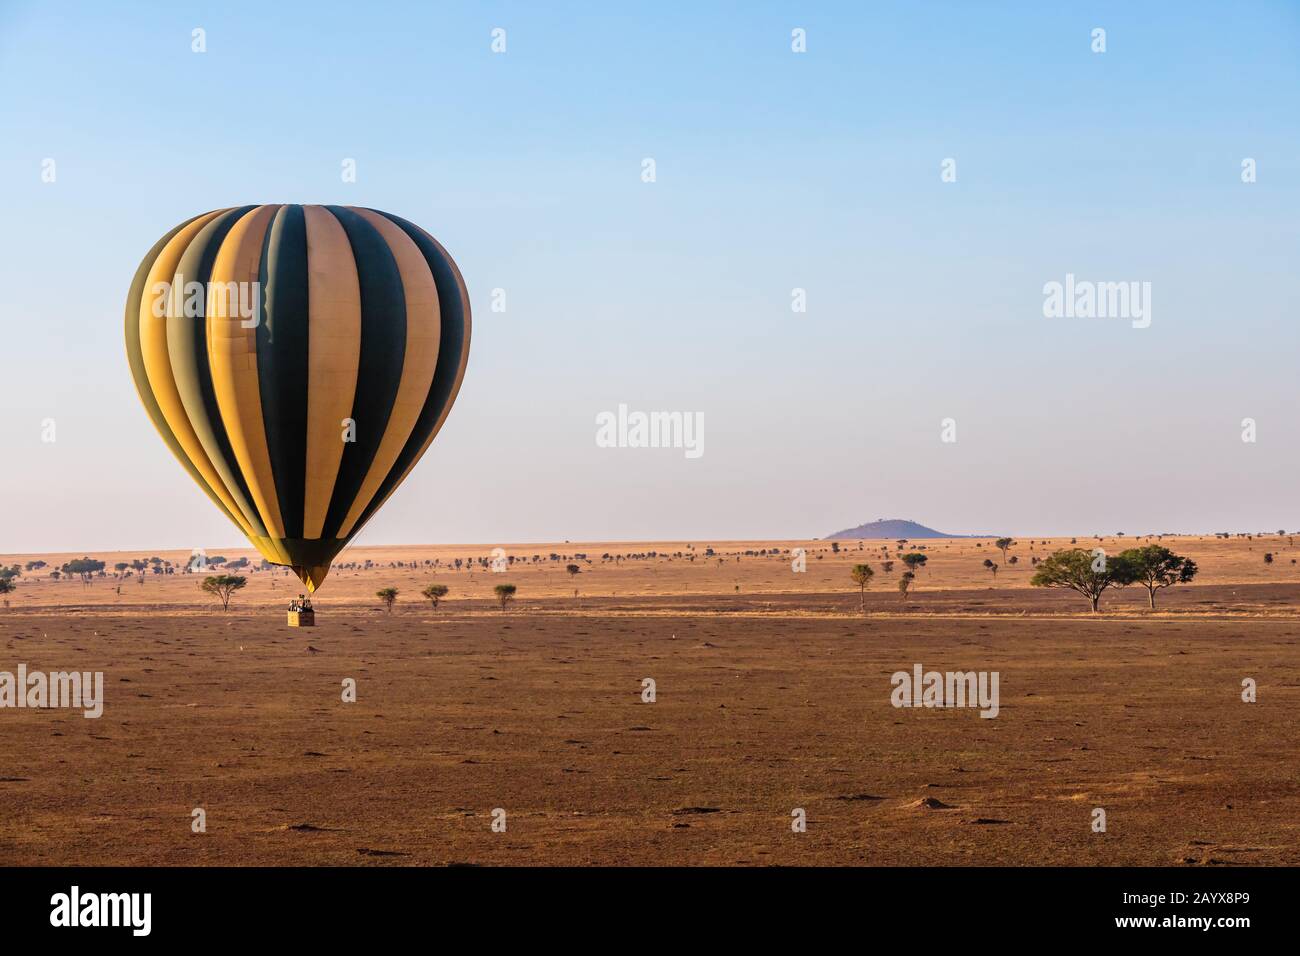 Morning Balloon Safari over the Serengeti in Tanzania Stock Photo